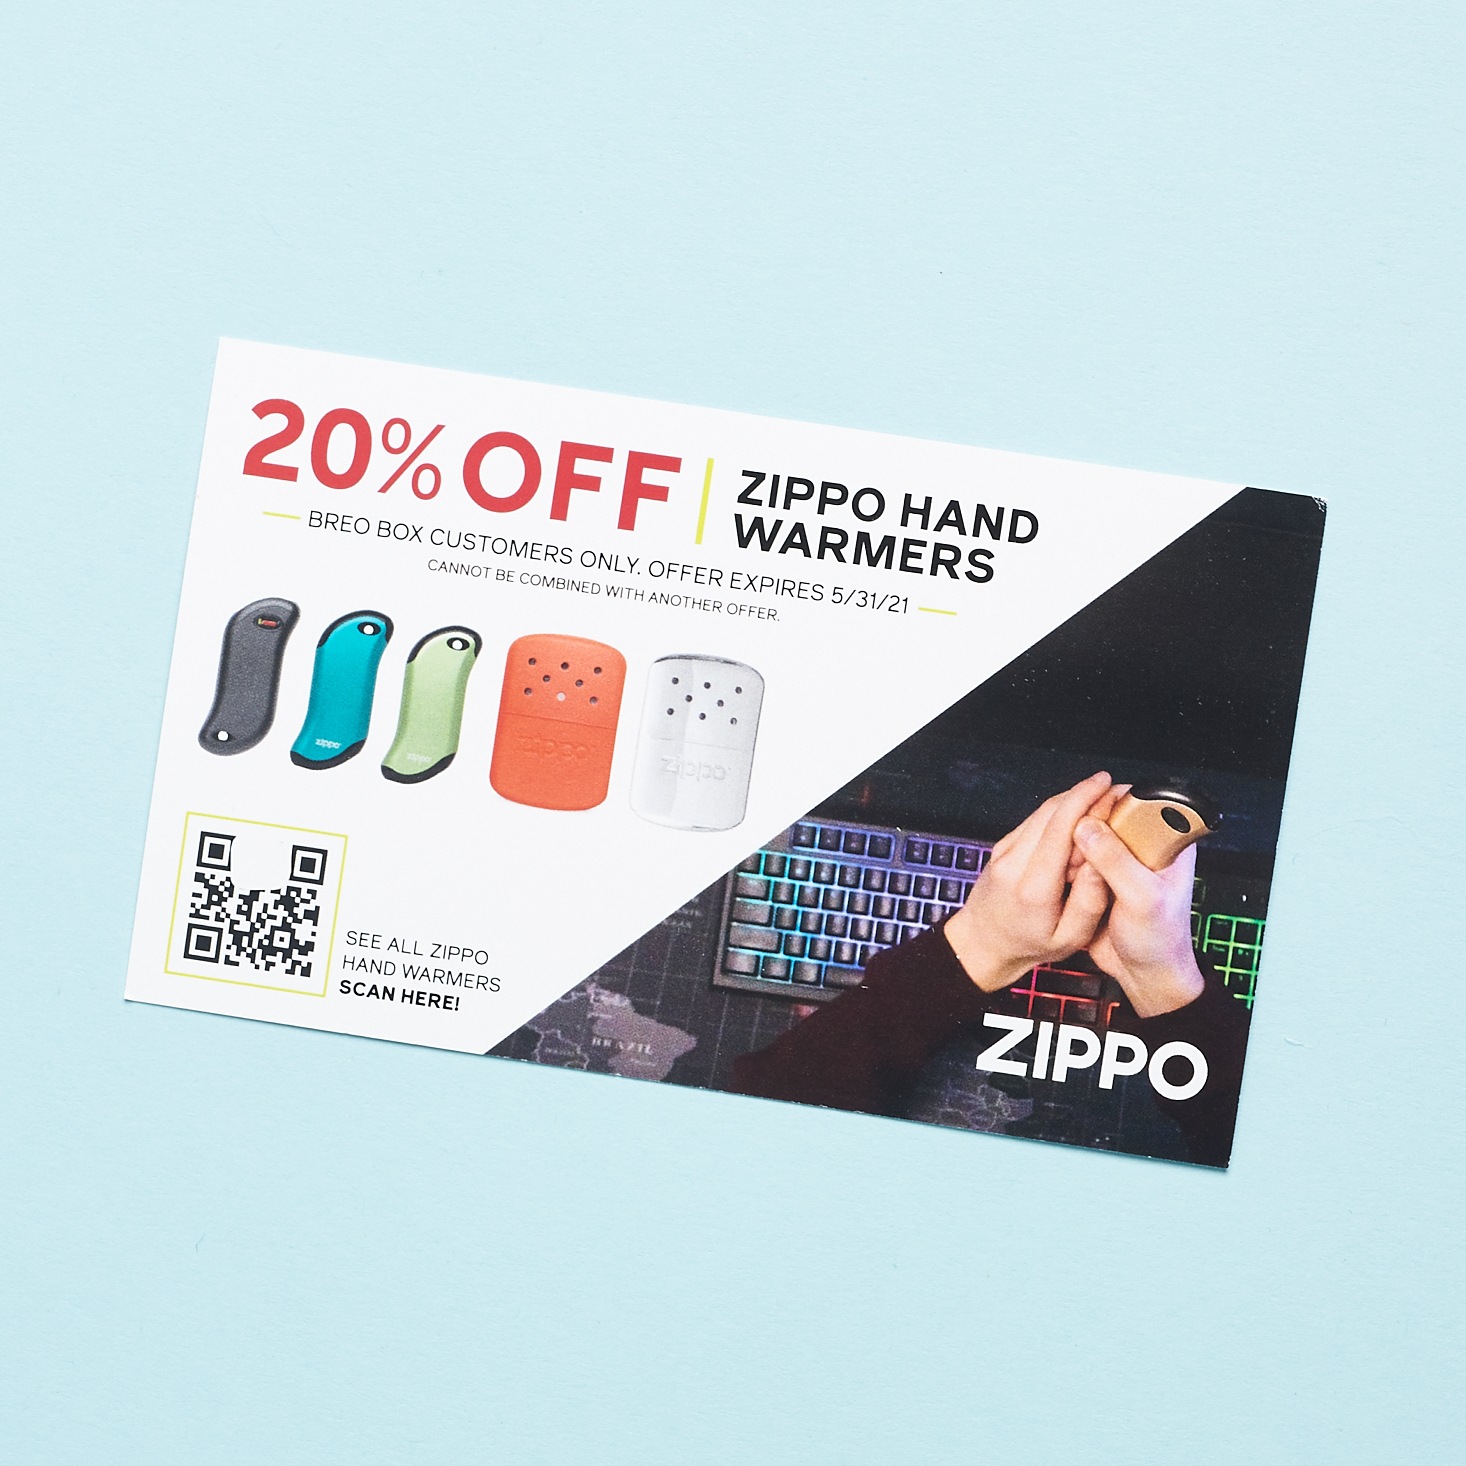 Zippo coupon